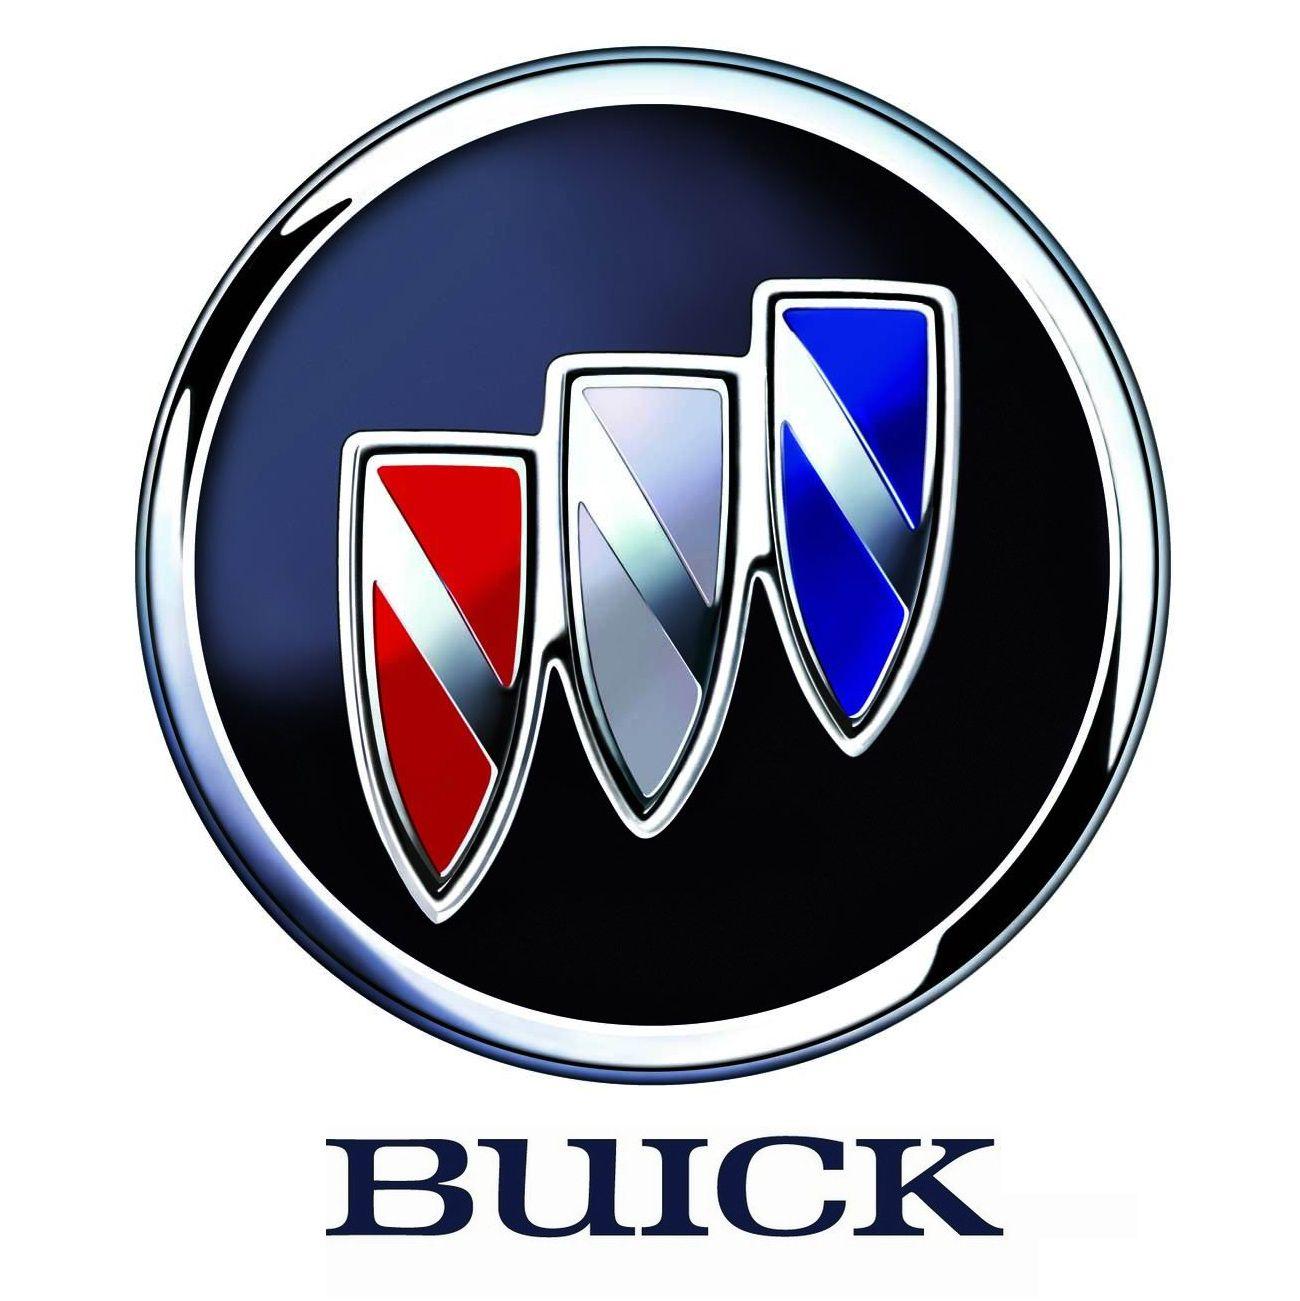 Buick Car Logo - Buick Logo, Buick Car Symbol Meaning and History | Car Brand Names.com